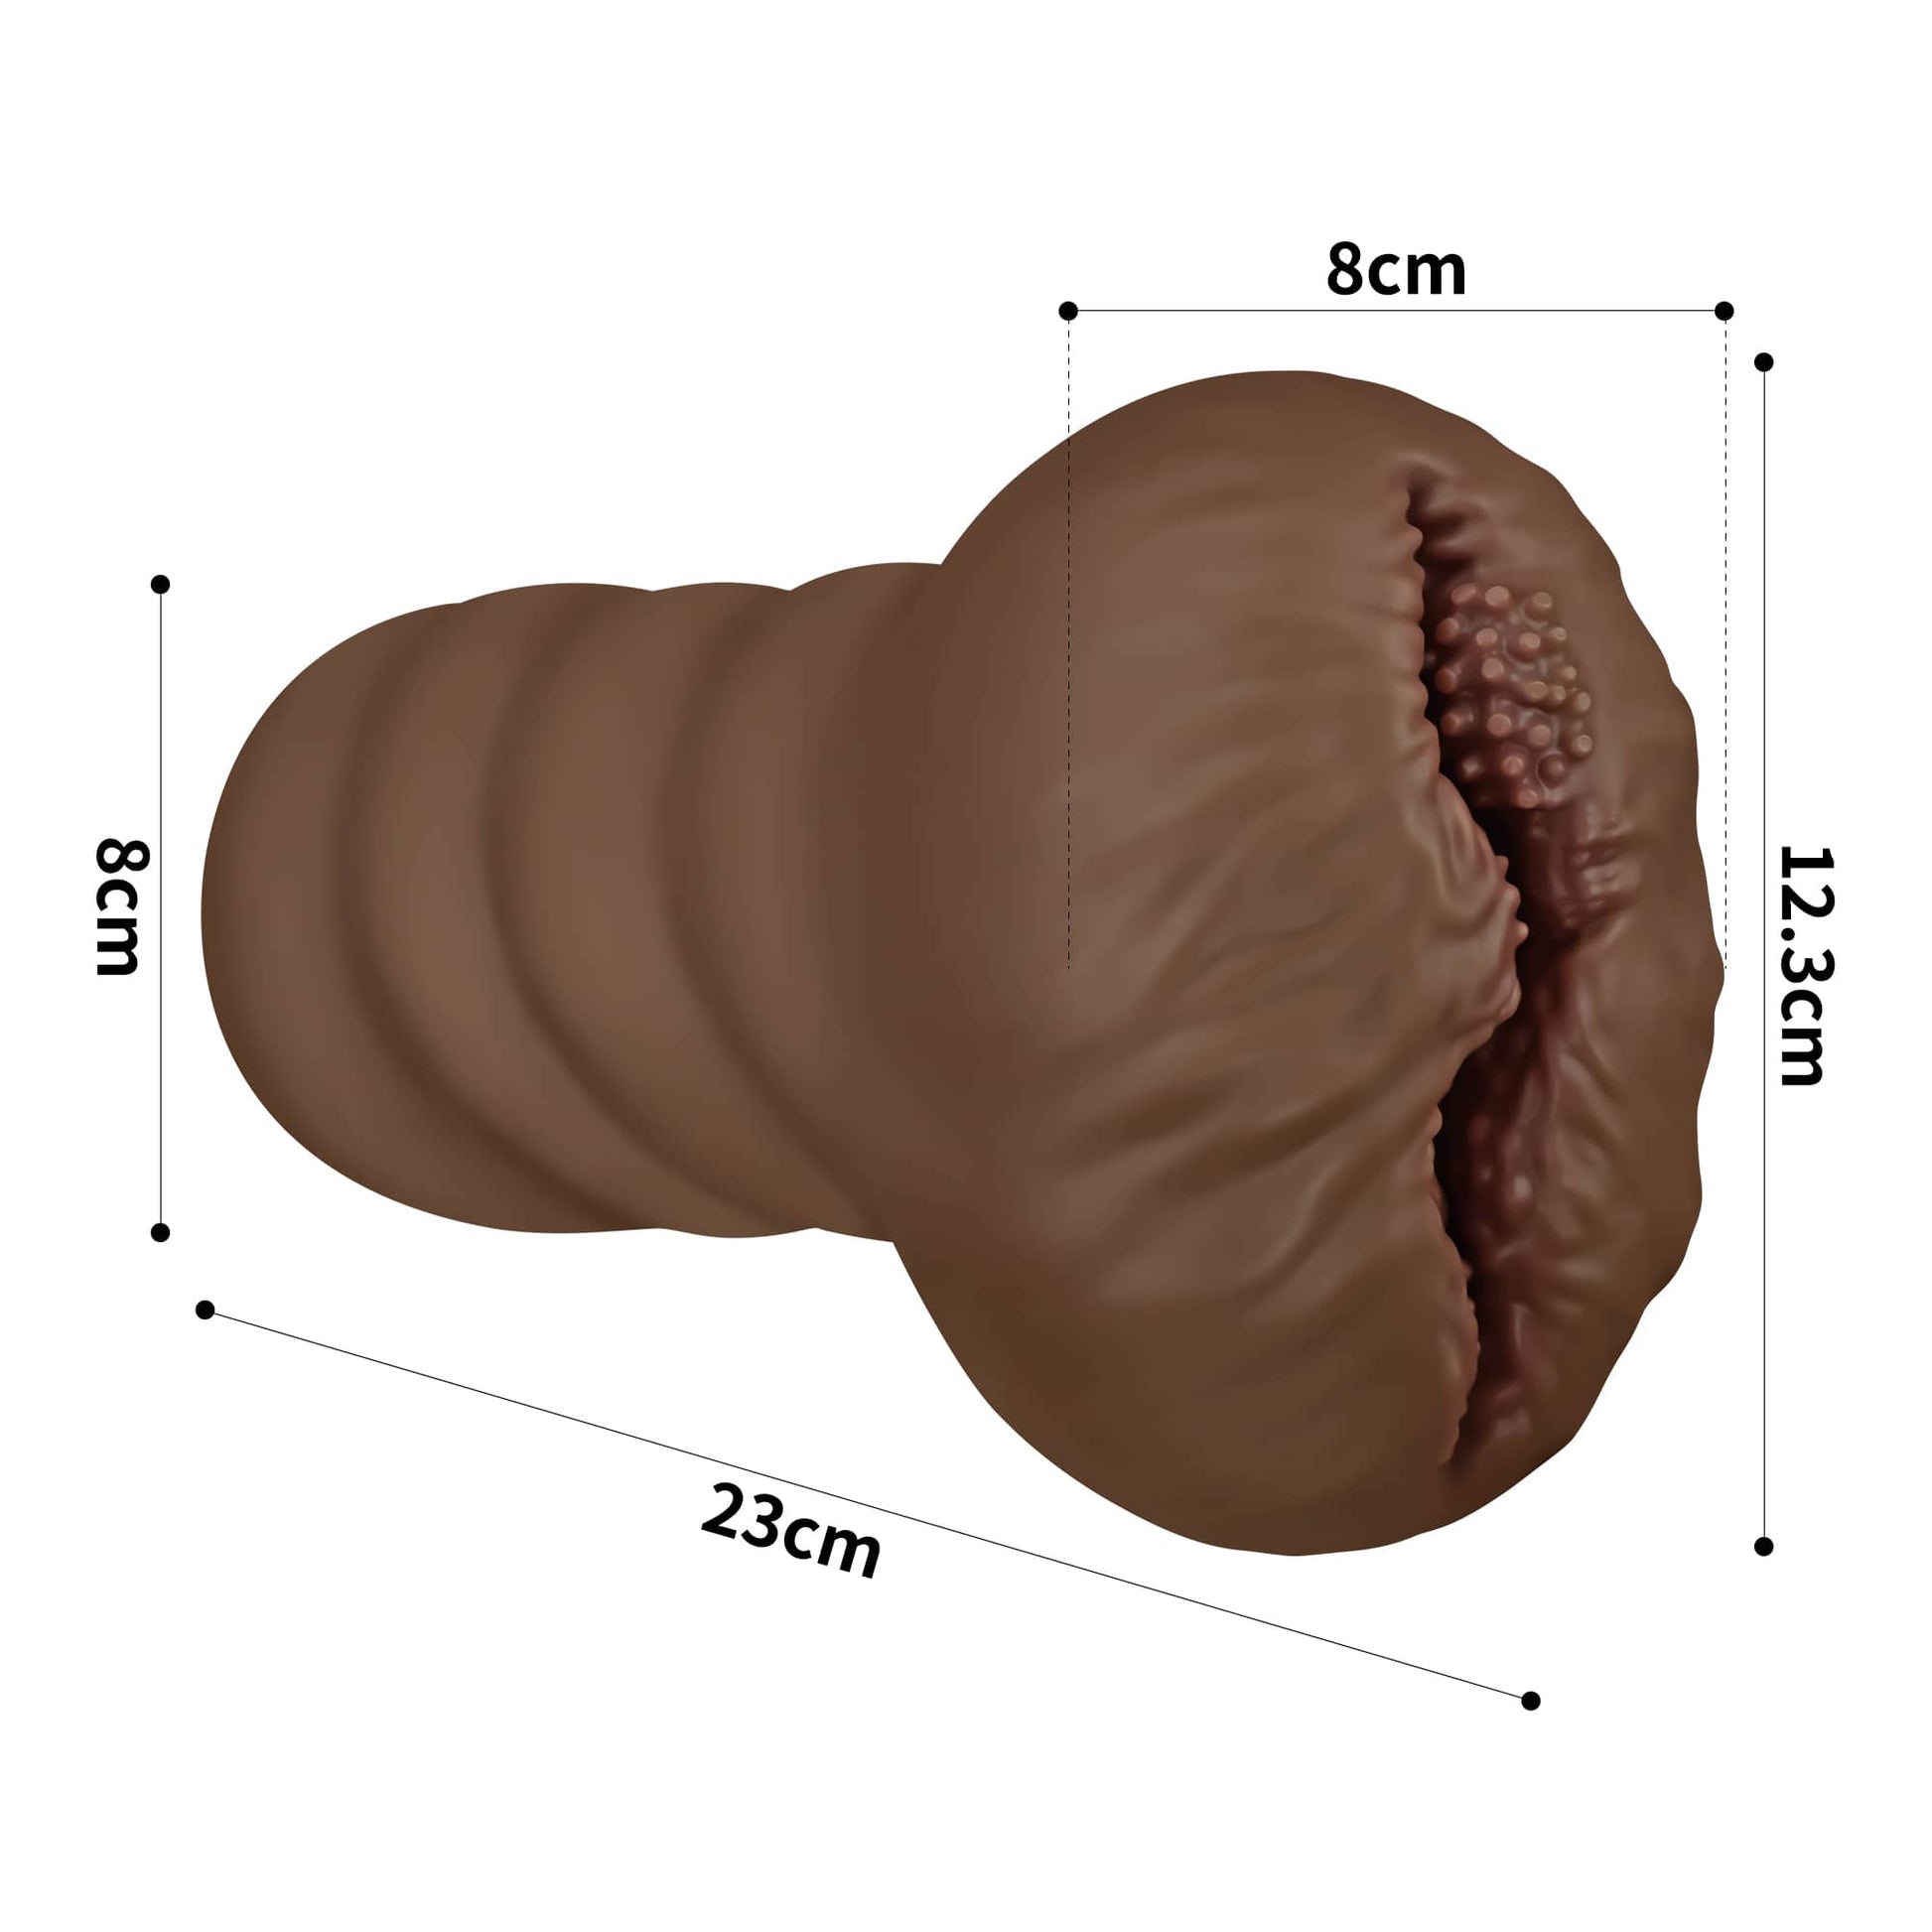 The size of the aliens pie male masturbator black